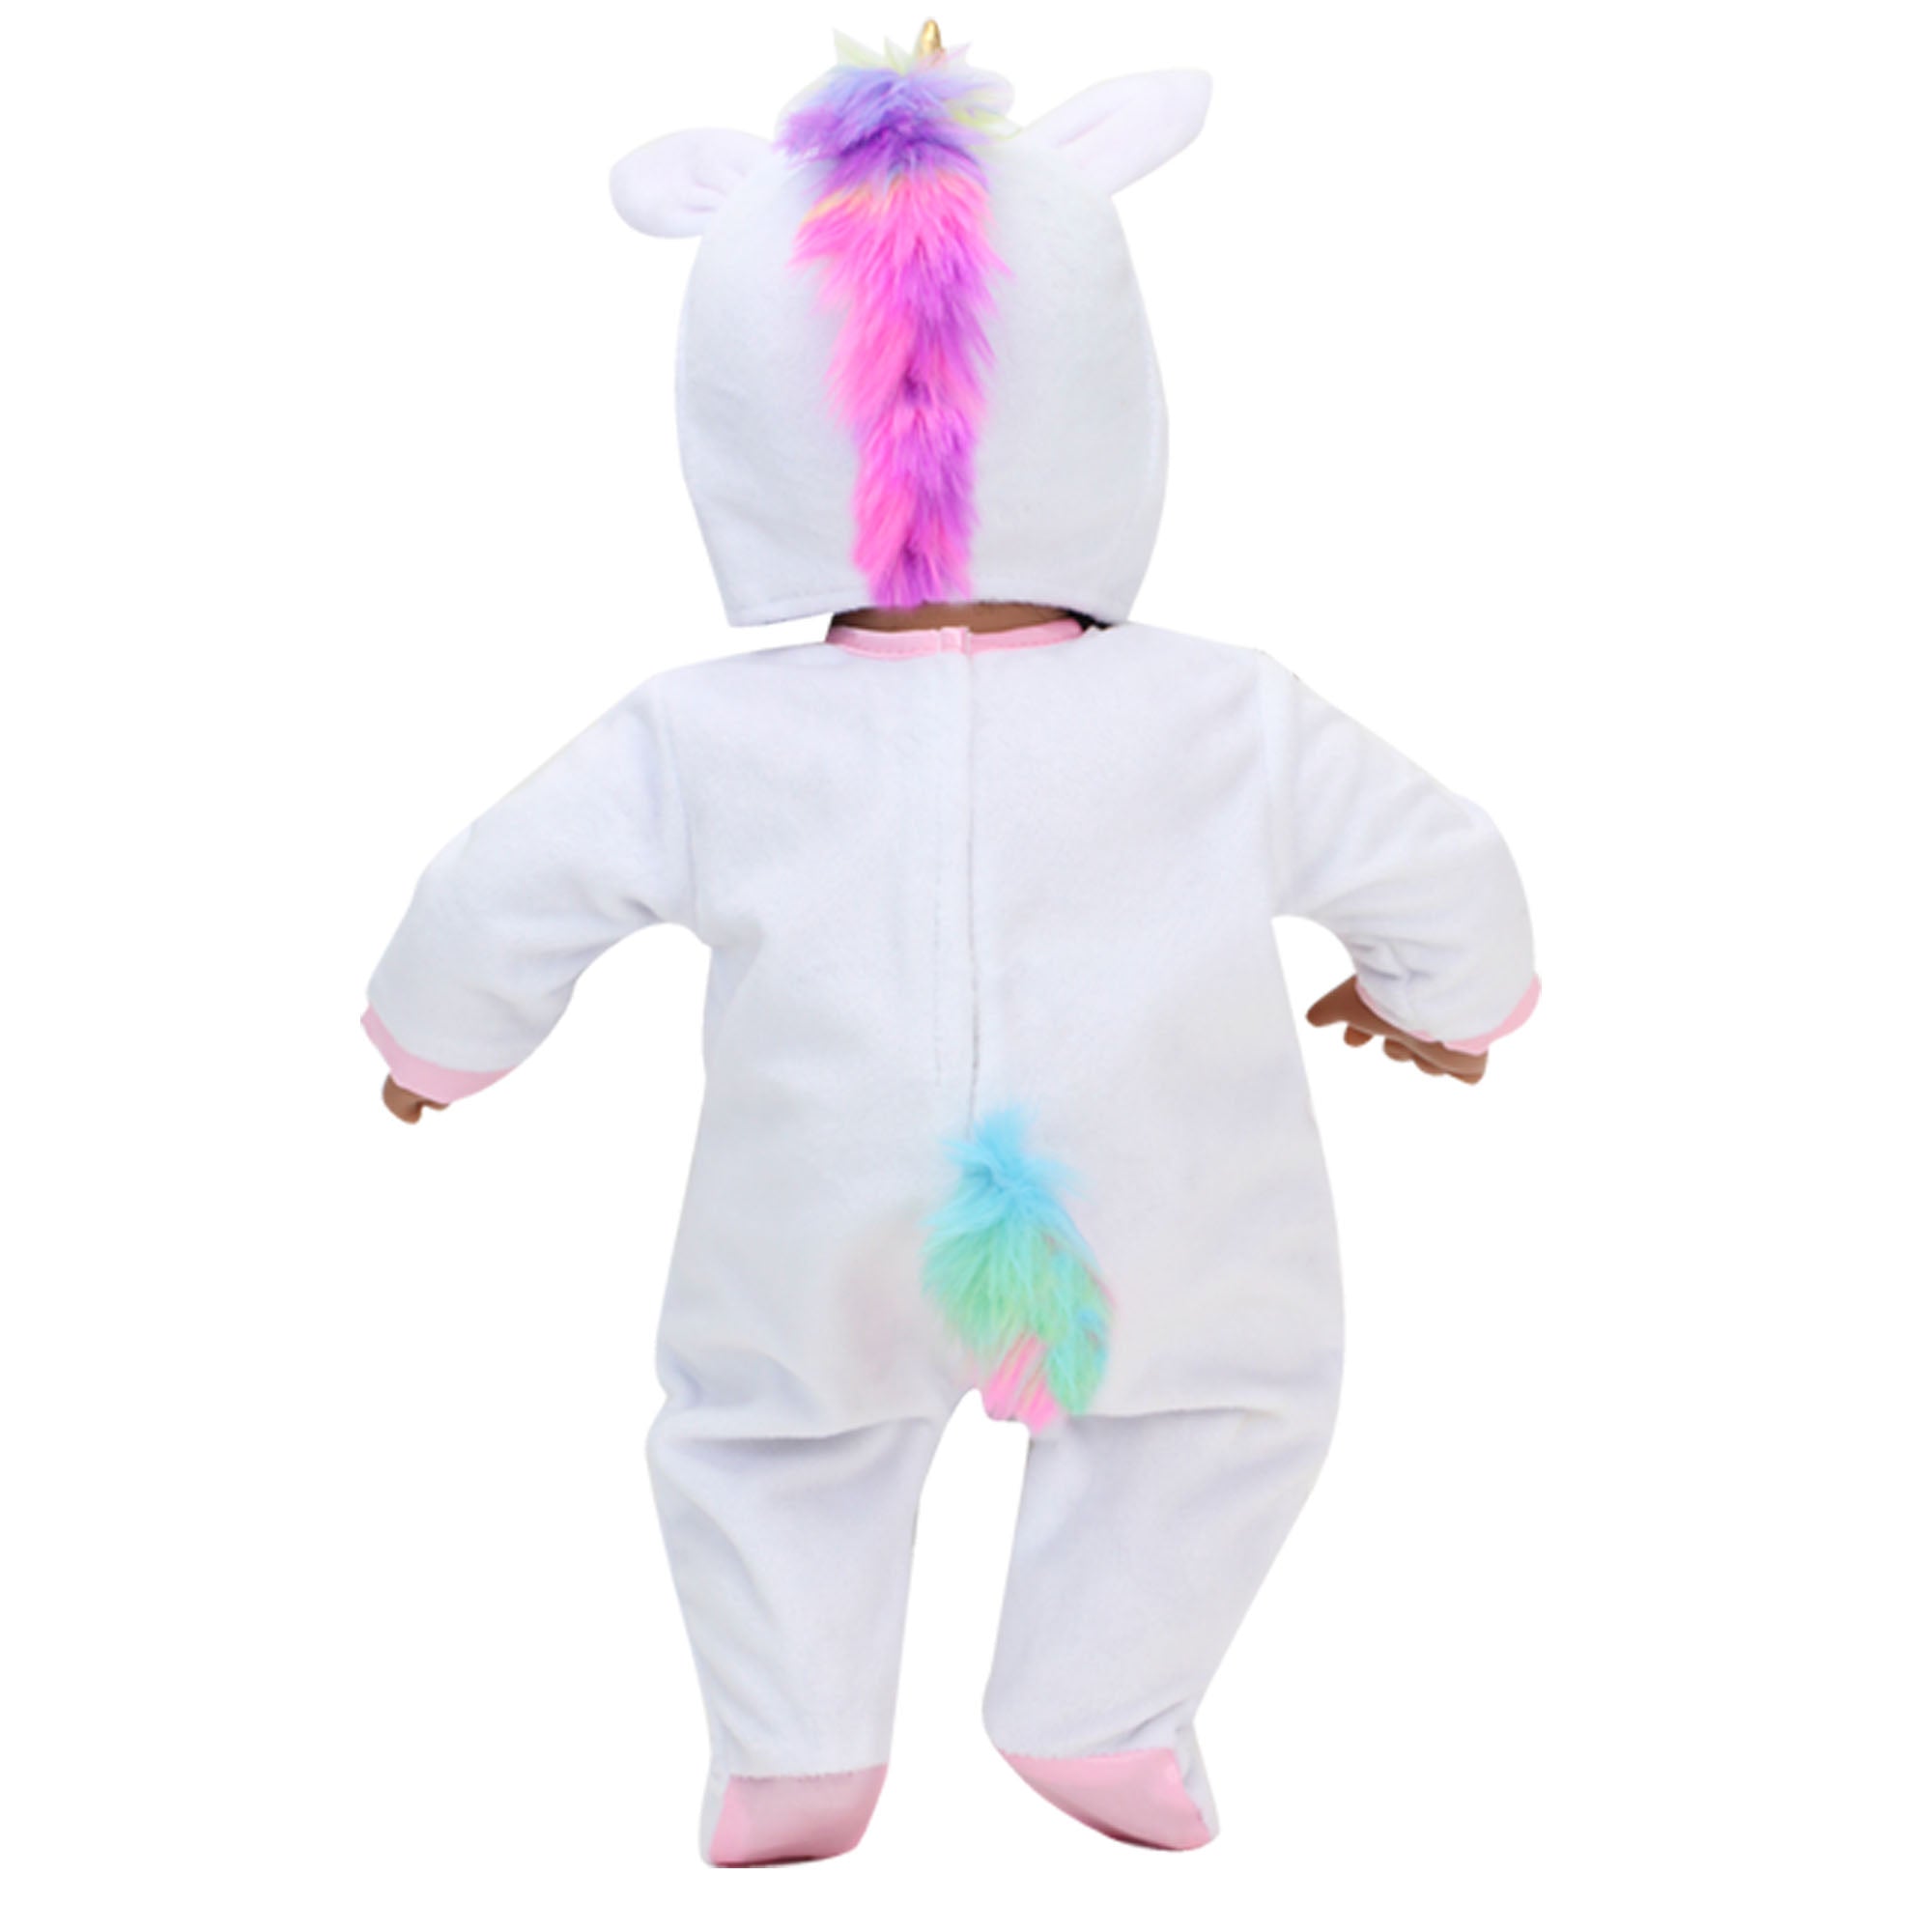 Sophia's 2 Piece Unicorn Costume with Rainbow Hair for 15" Dolls, White